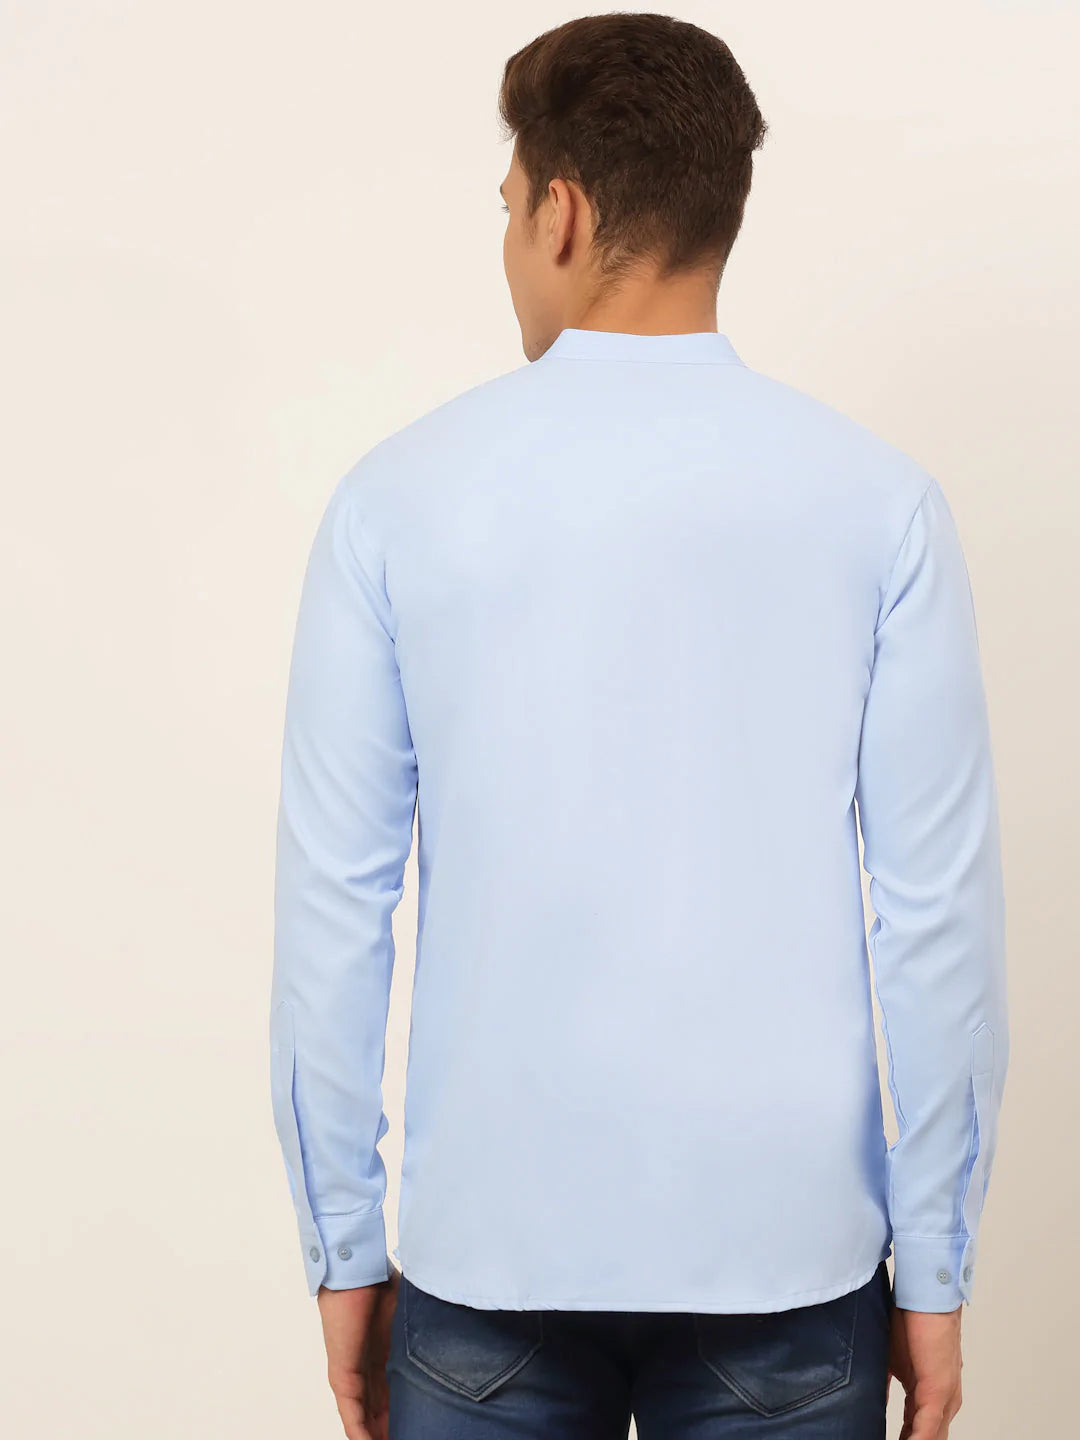 Jompers Men's Light-Blue Solid Cotton Short Kurta ( KO 677 Light-Blue )